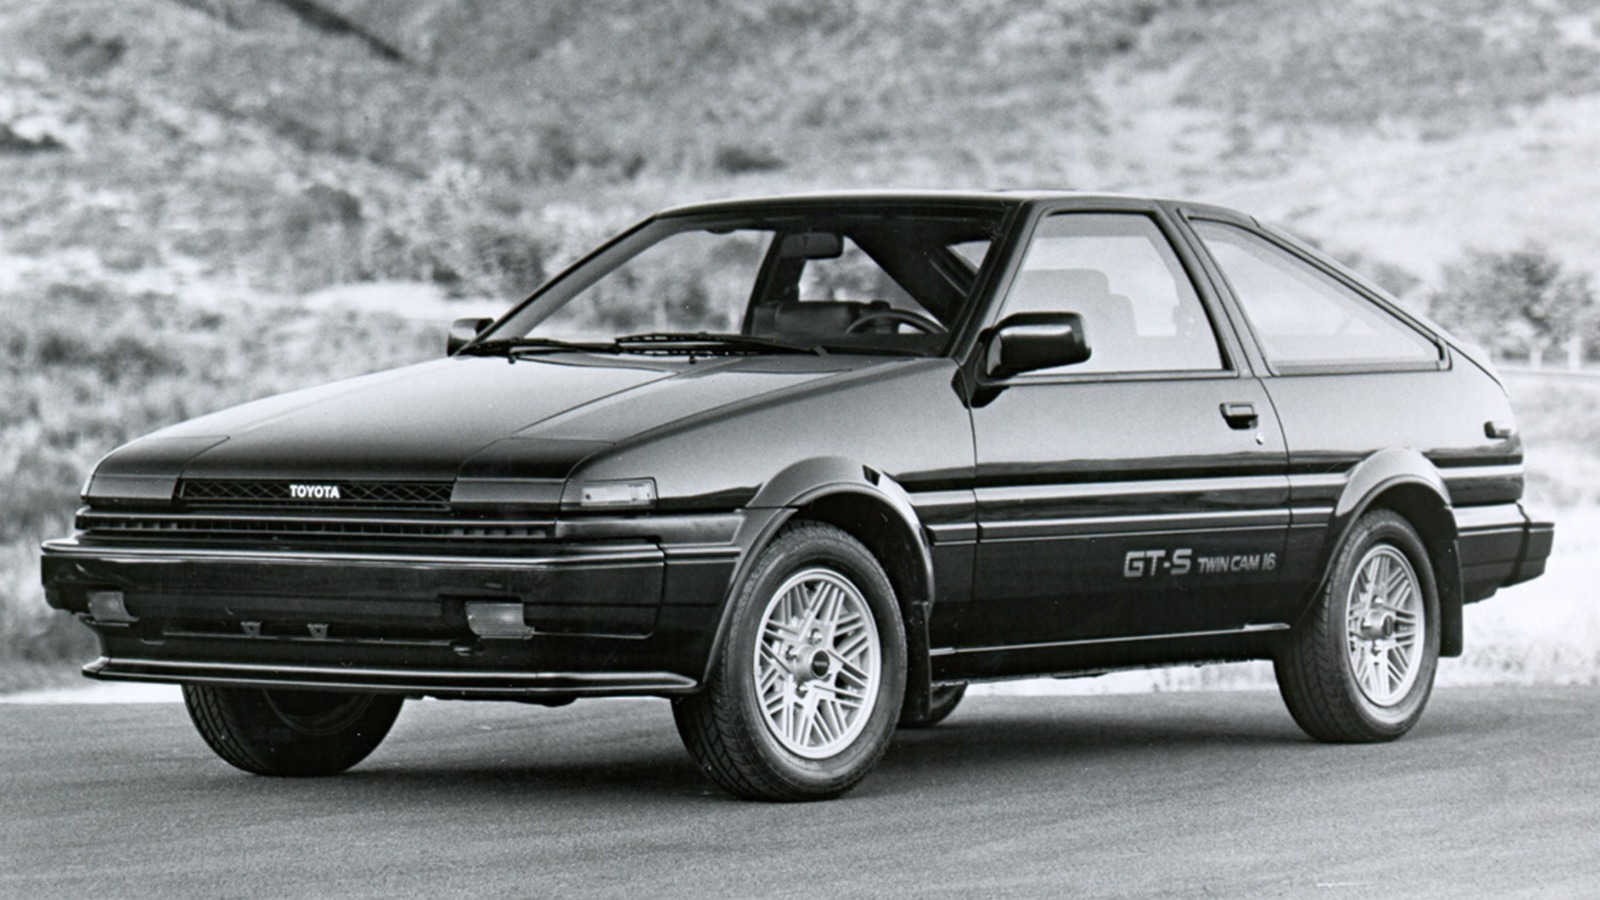 Qué hizo del Toyota Corolla GT-S 1985 un coche sencillo pero divertido de conducir